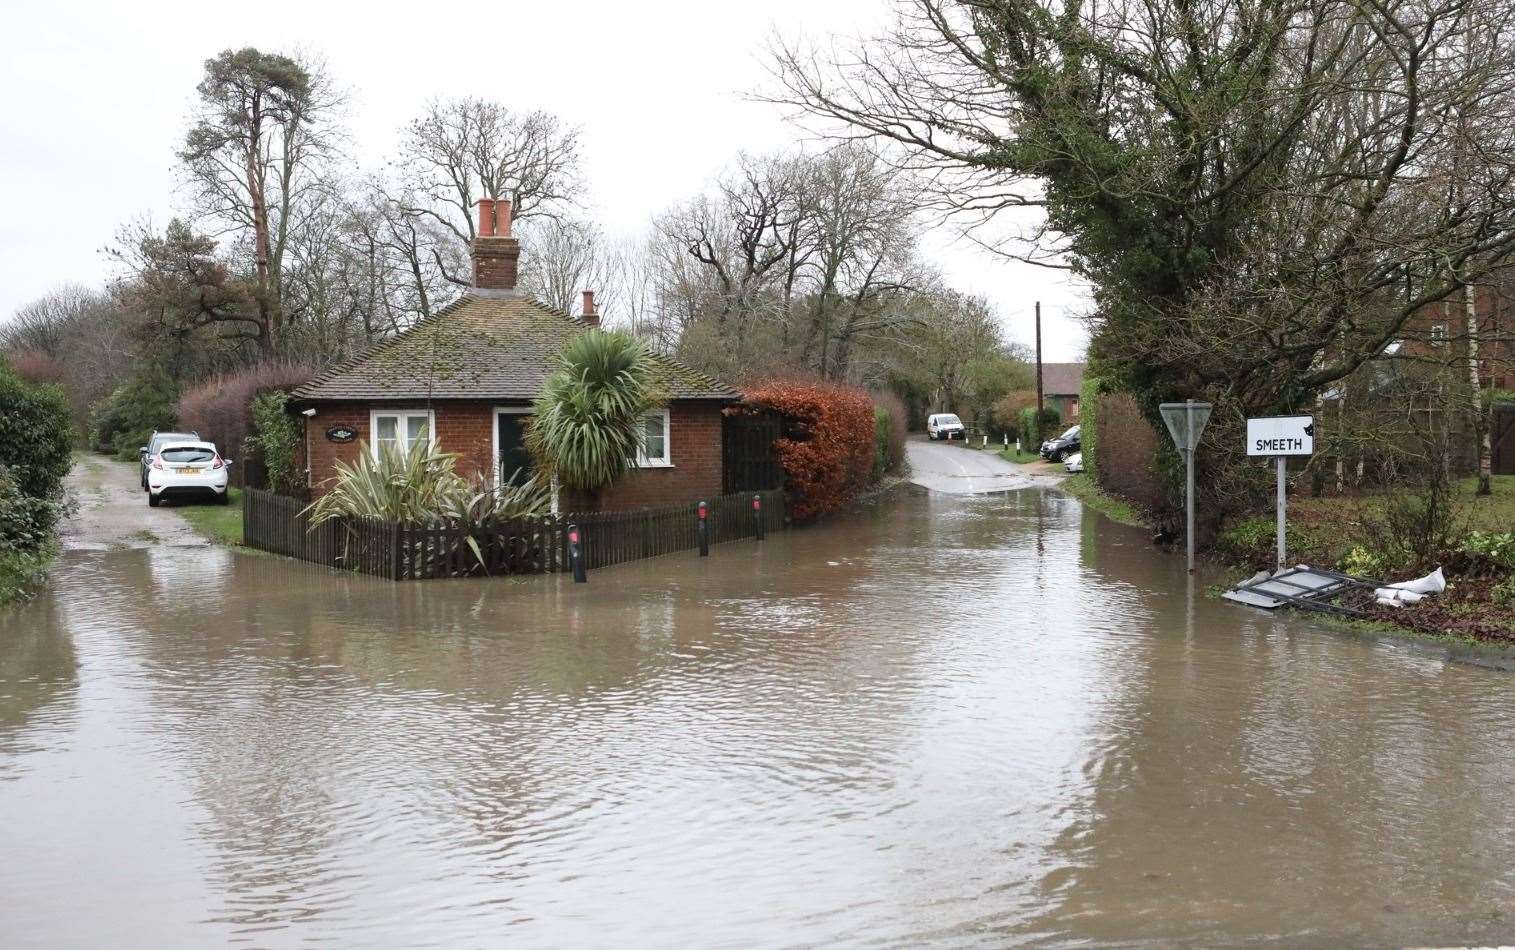 Flooding in Smeeth, near Ashford Picture: UKNIP